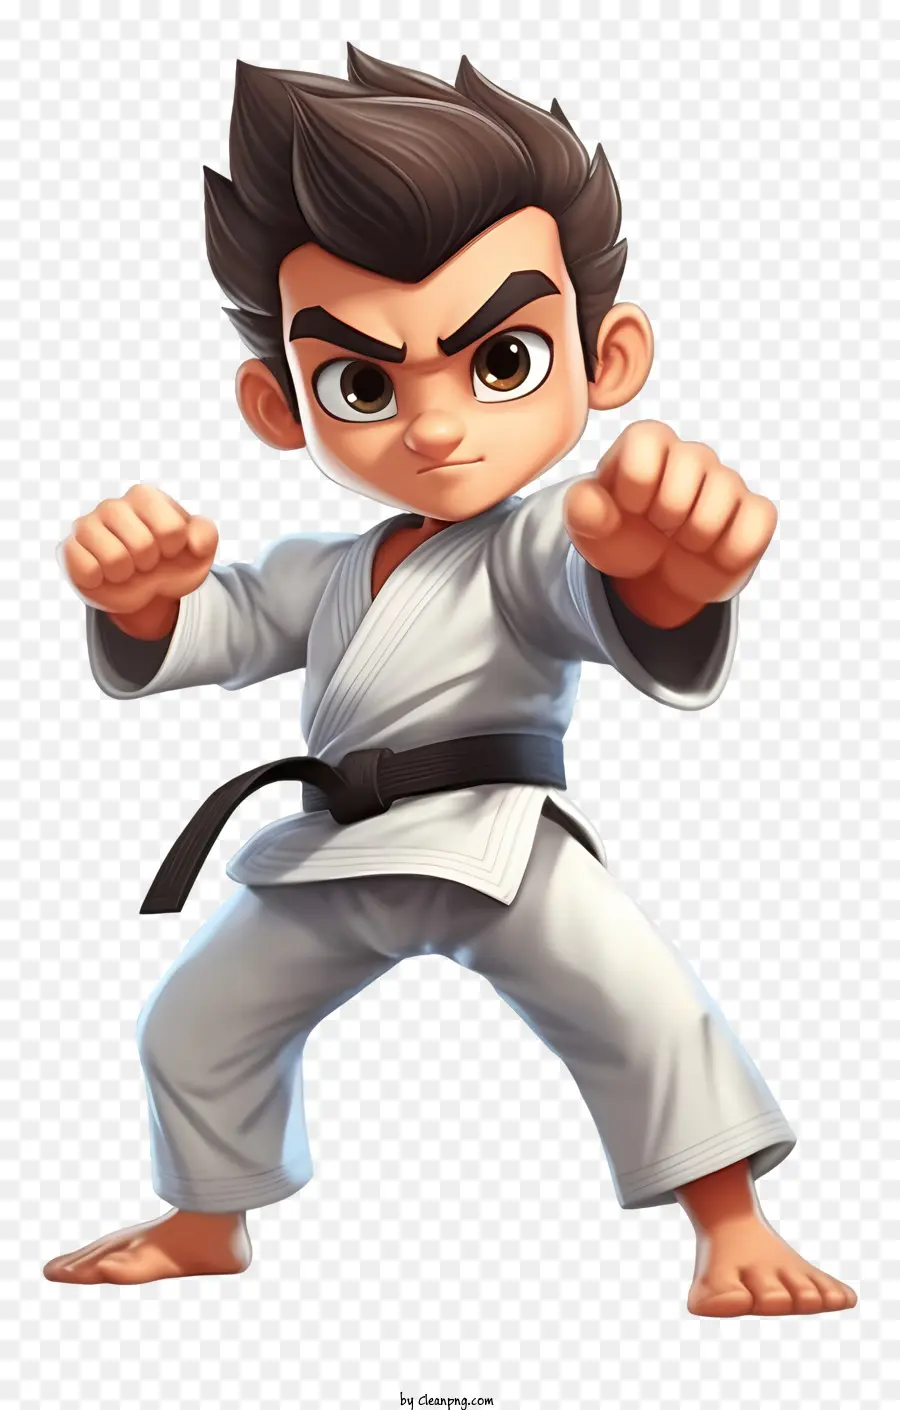 Fighter Karate Karate Martial Arts White Karate Outfit Black Belt - Giovano in uniforme in karate con espressione determinata